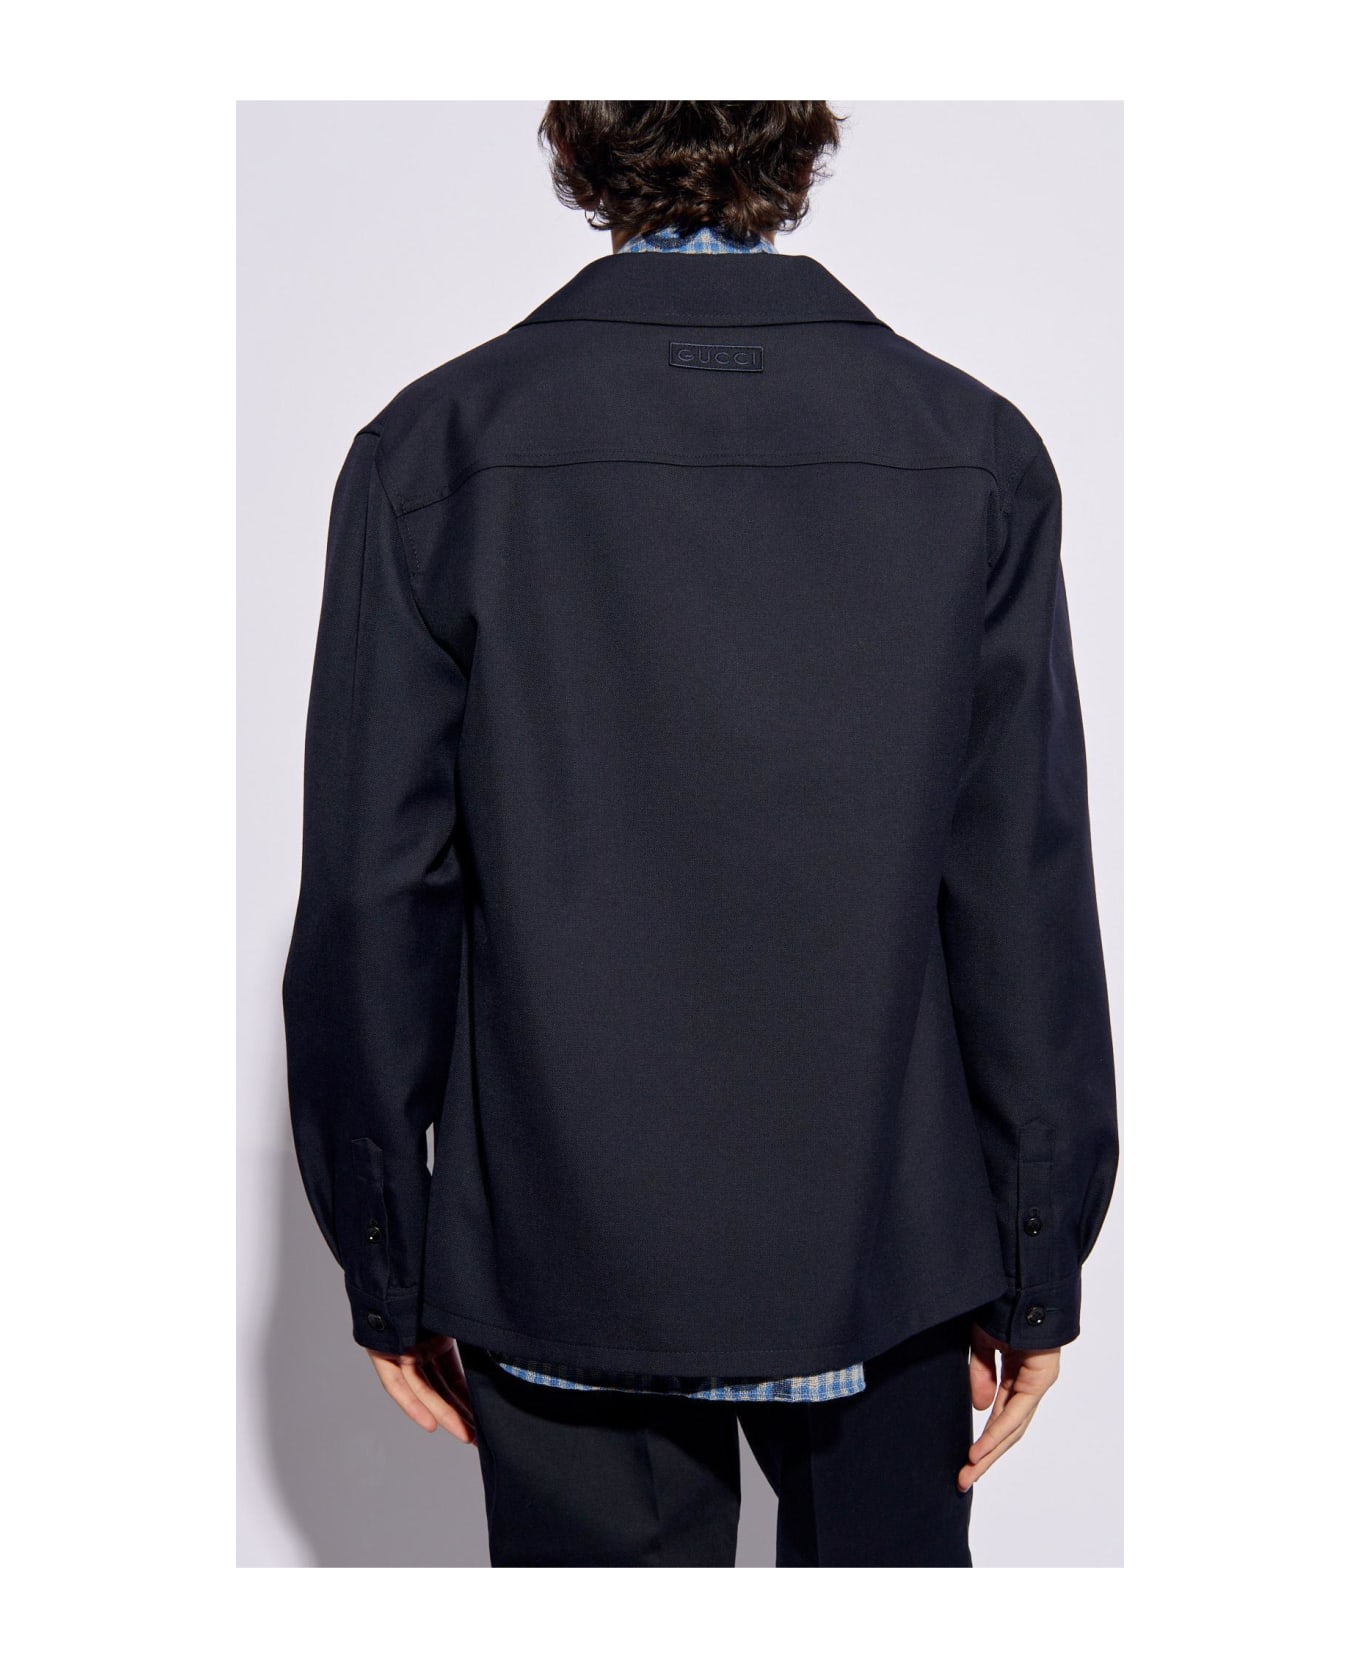 Gucci Jacket With Logo - Blue ジャケット